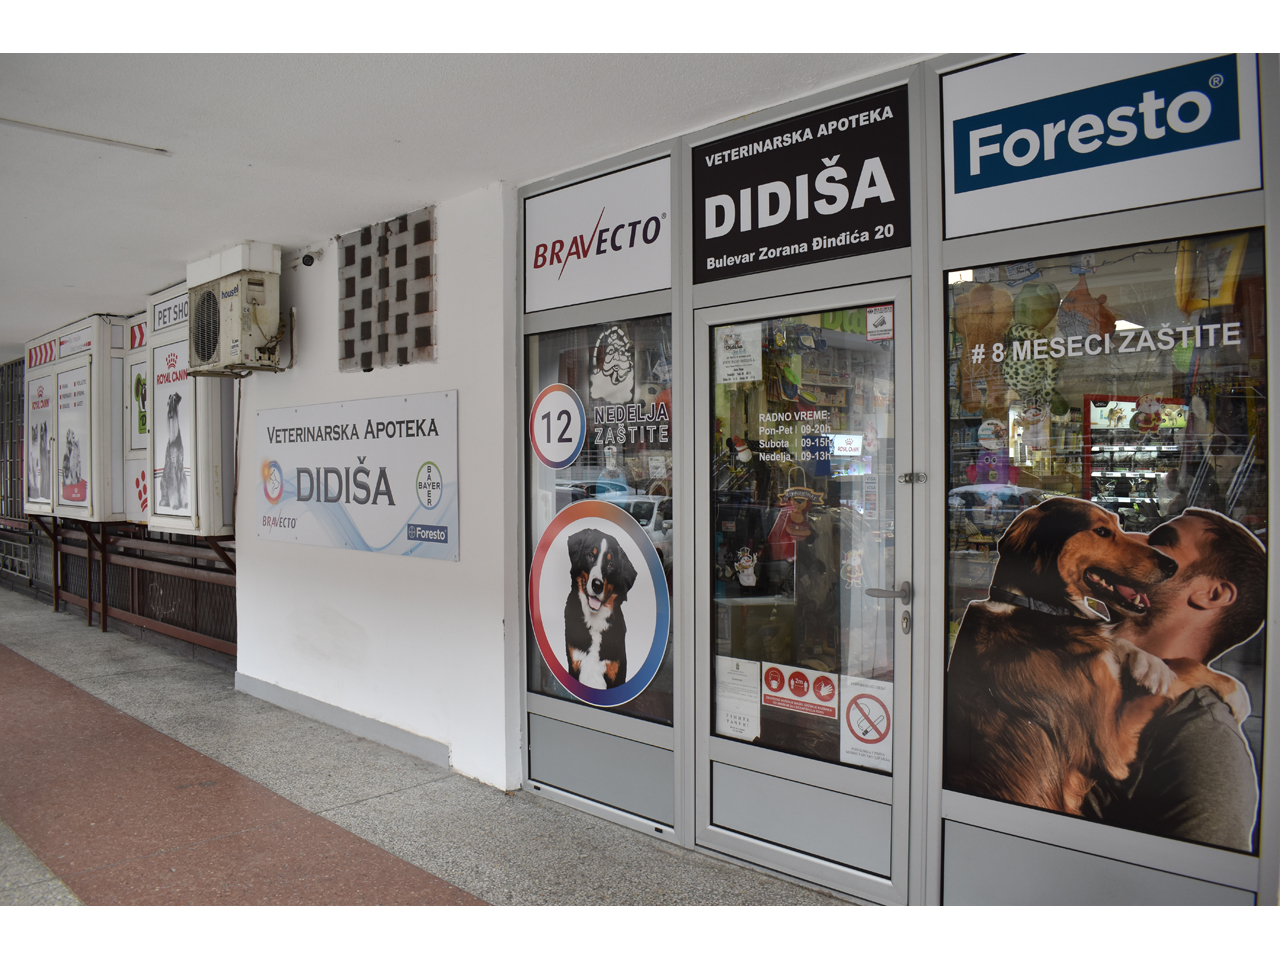 DIDISA VETERINARY PHARMACY AND PET SHOP Pets, pet shop Beograd